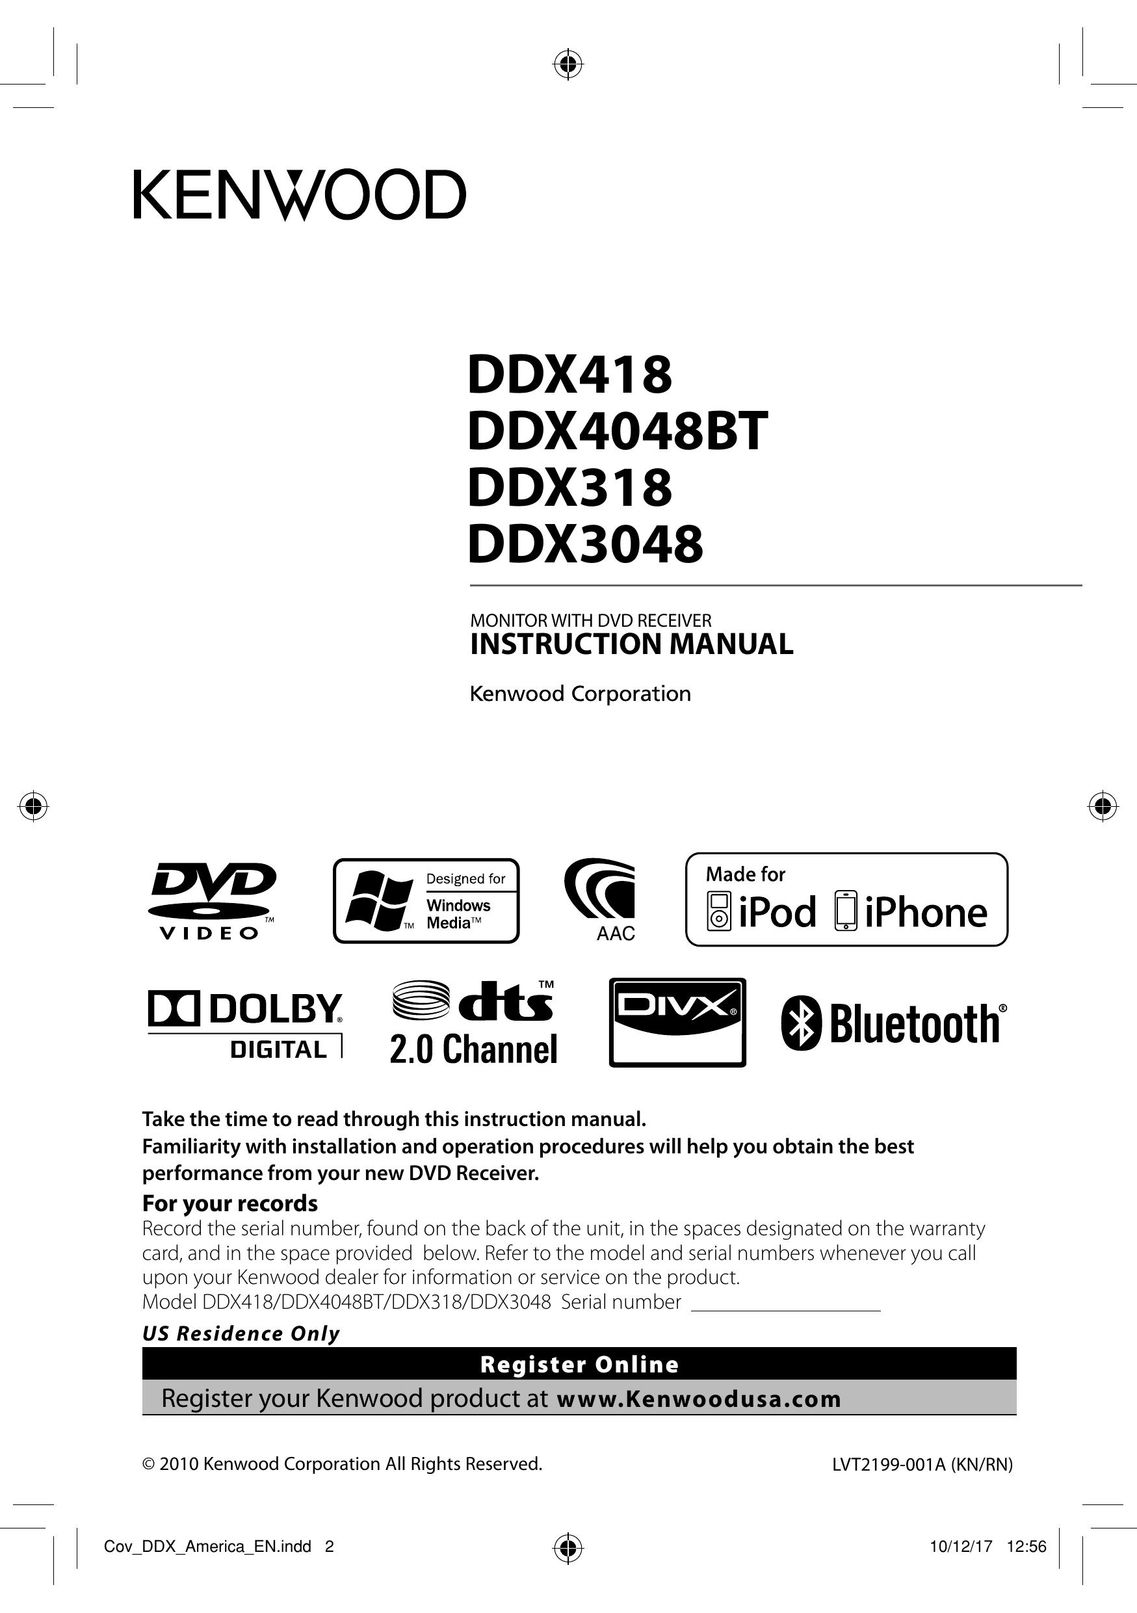 Kenwood DDX3048 Car Video System User Manual